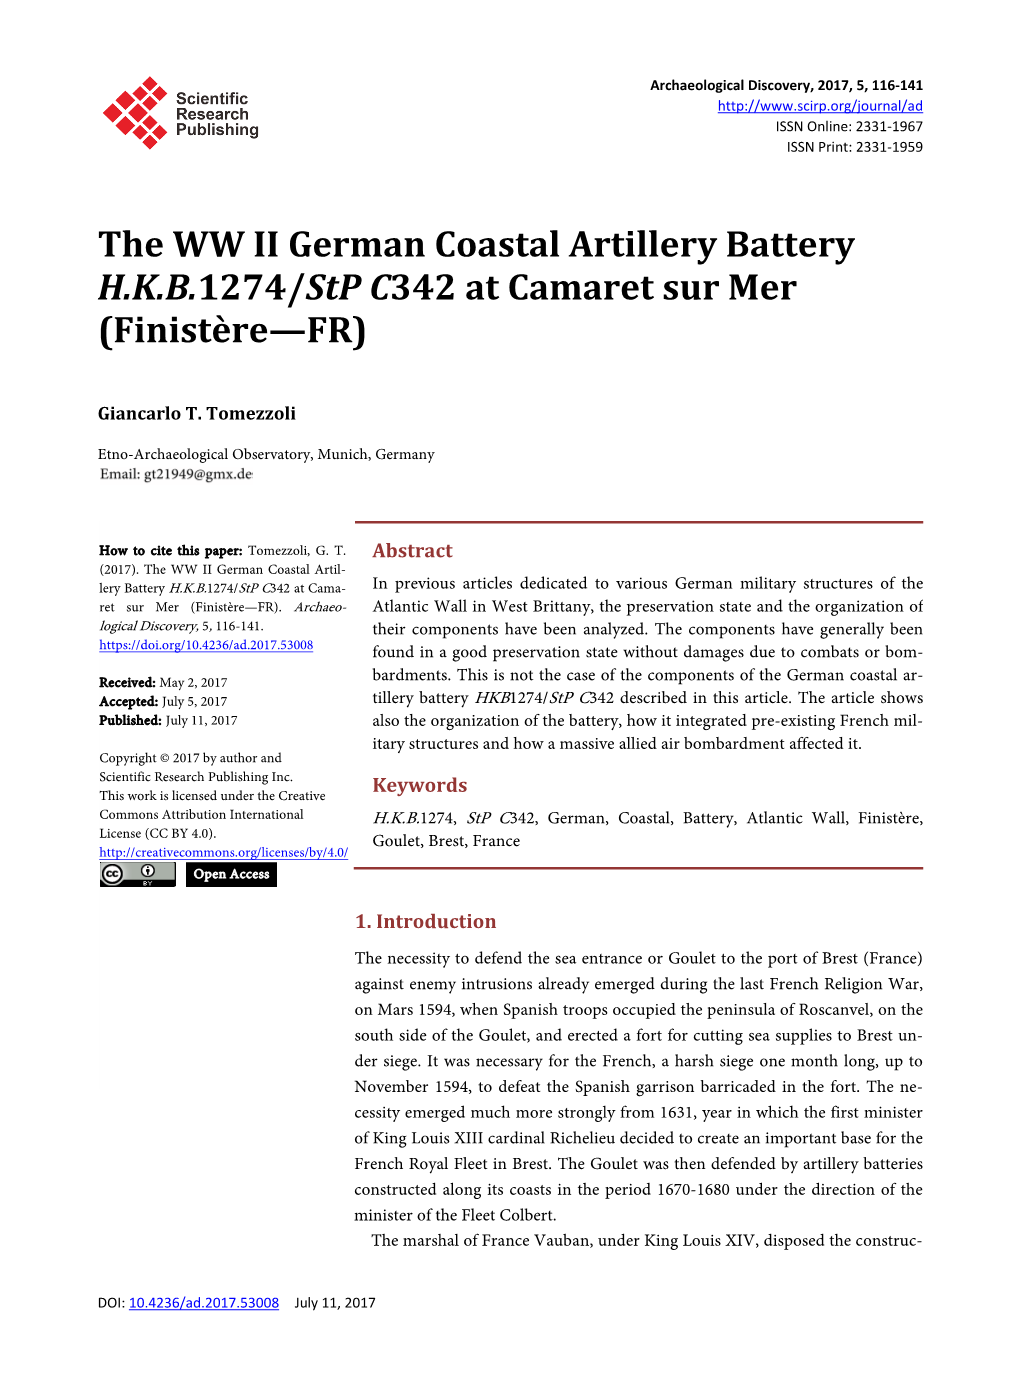 The WW II German Coastal Artillery Battery HKB1274/Stp C342 At